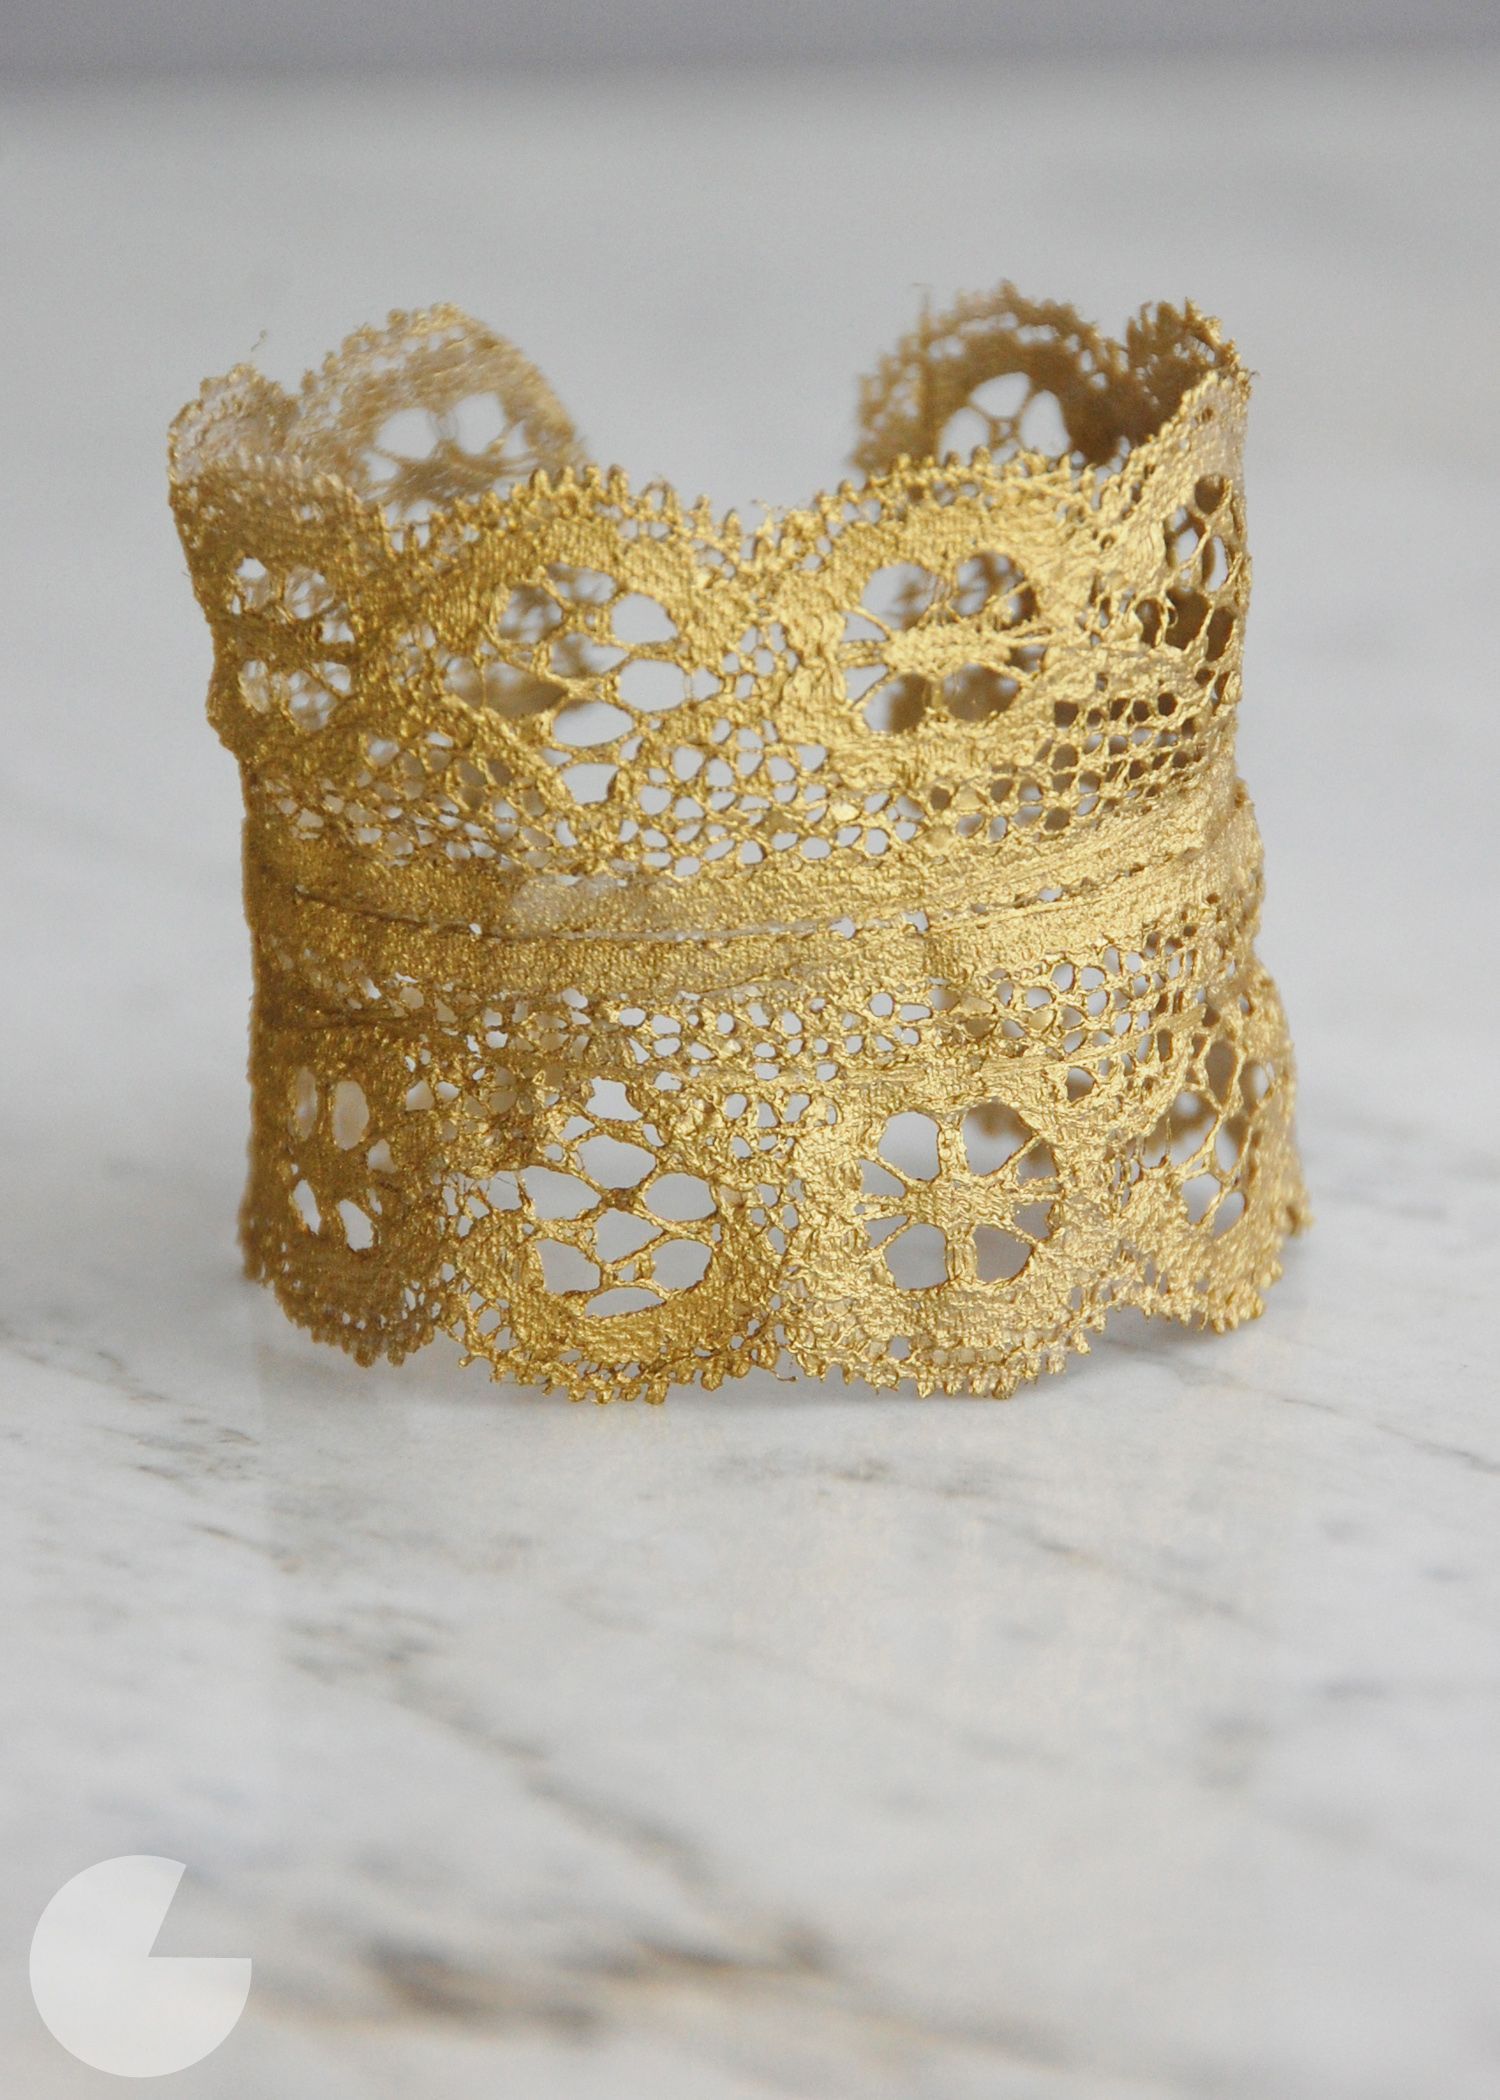 The Golden Lace Cuff #DIY #Bracelets